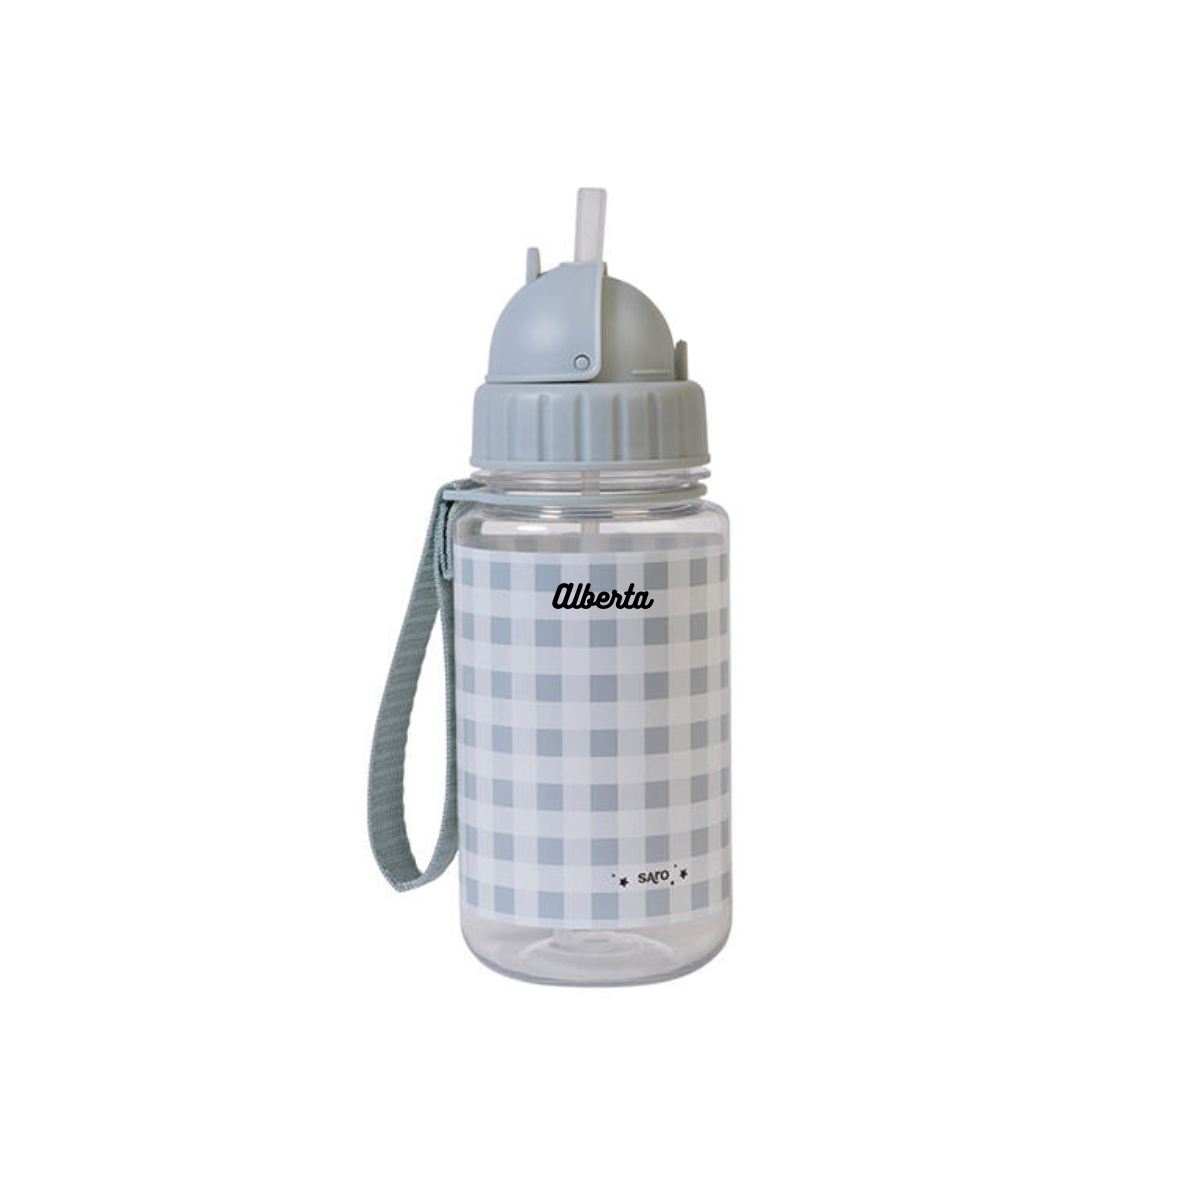 Biberones botellas de agua lactancia, biberón, blanco, infantil,  almacenamiento de alimentos png